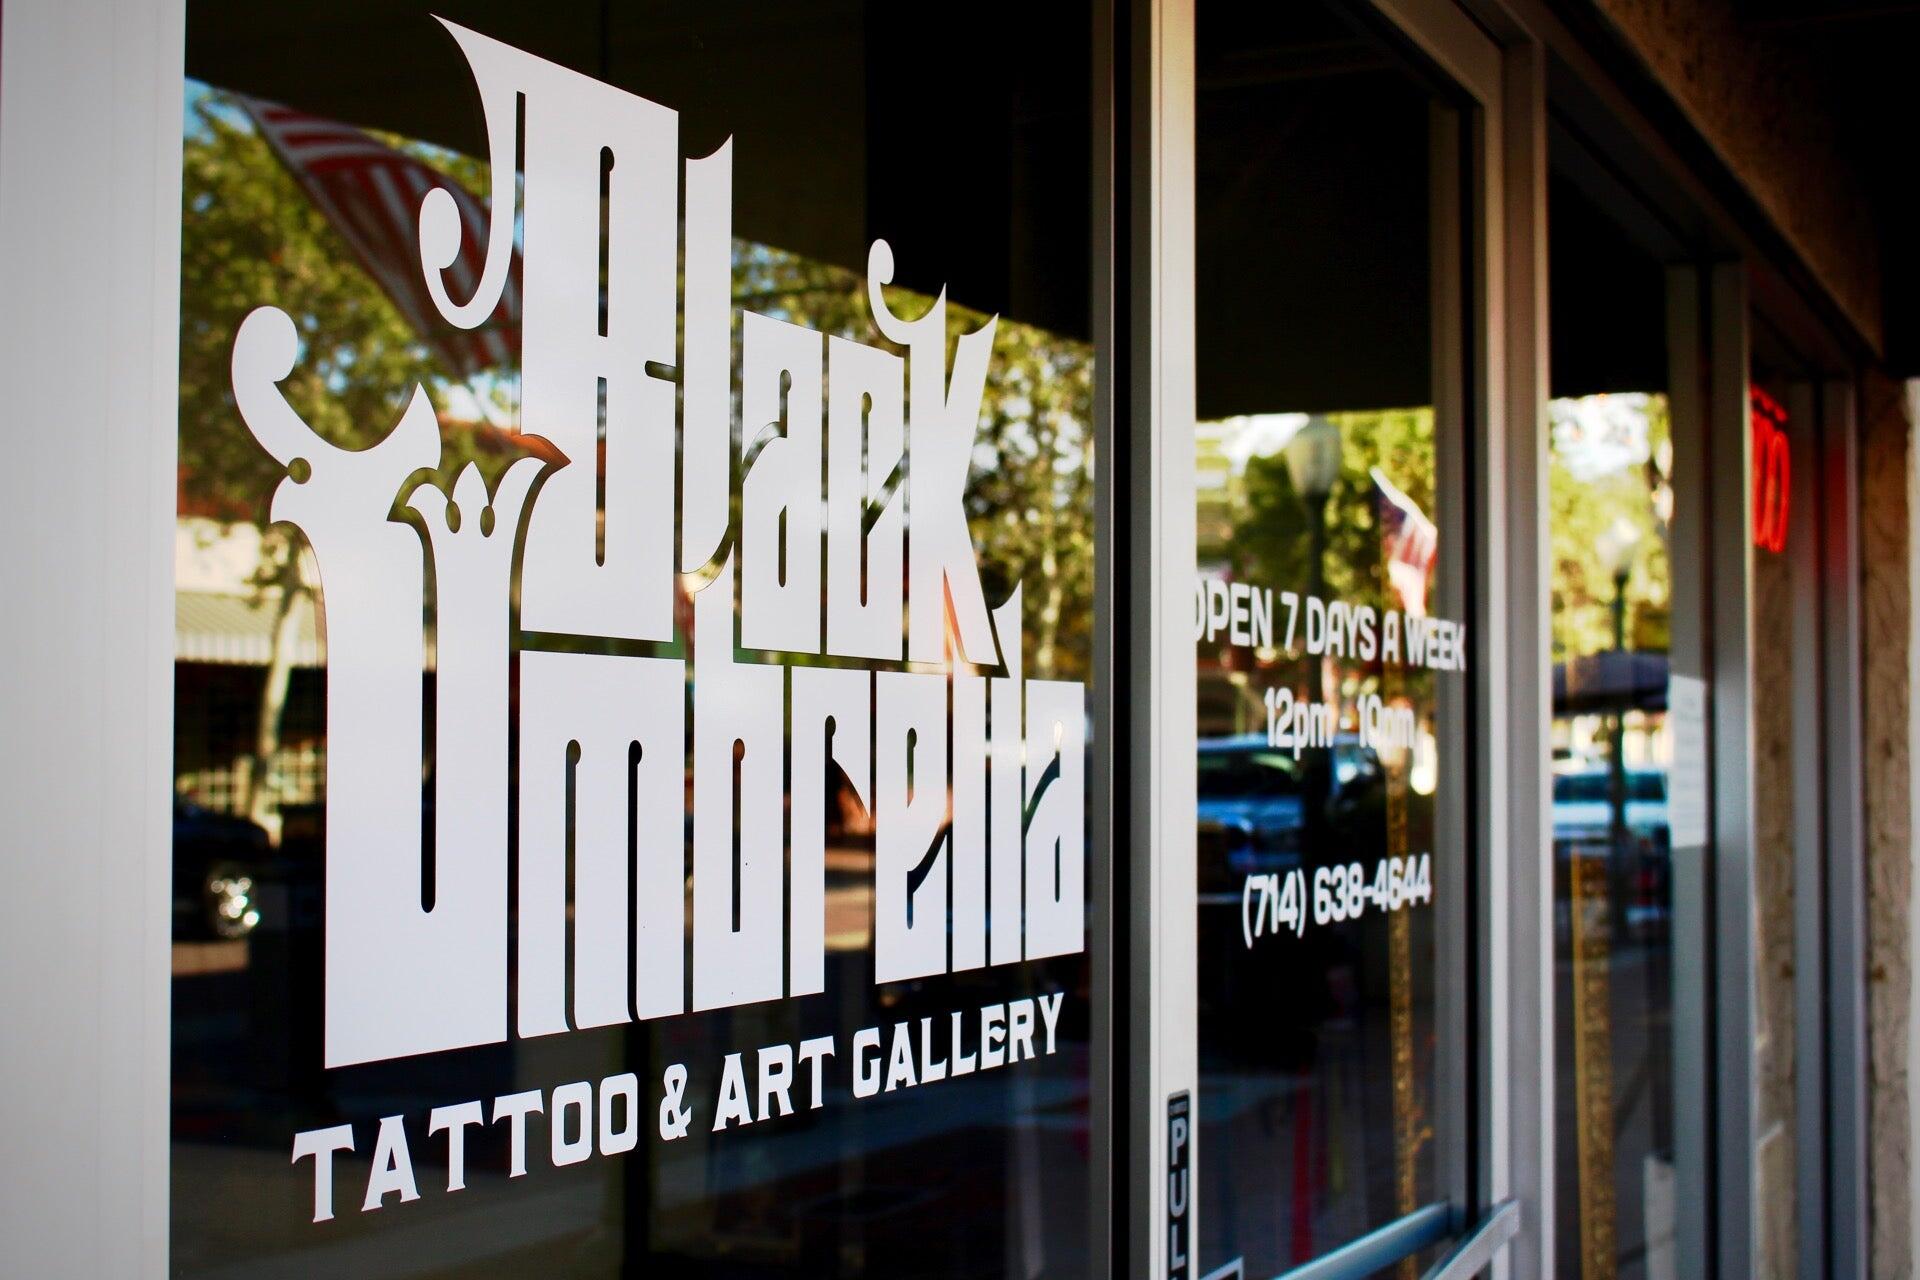 Black Umbrella Tattoo and Art Gallery - Garden Grove, CA - Nextdoor